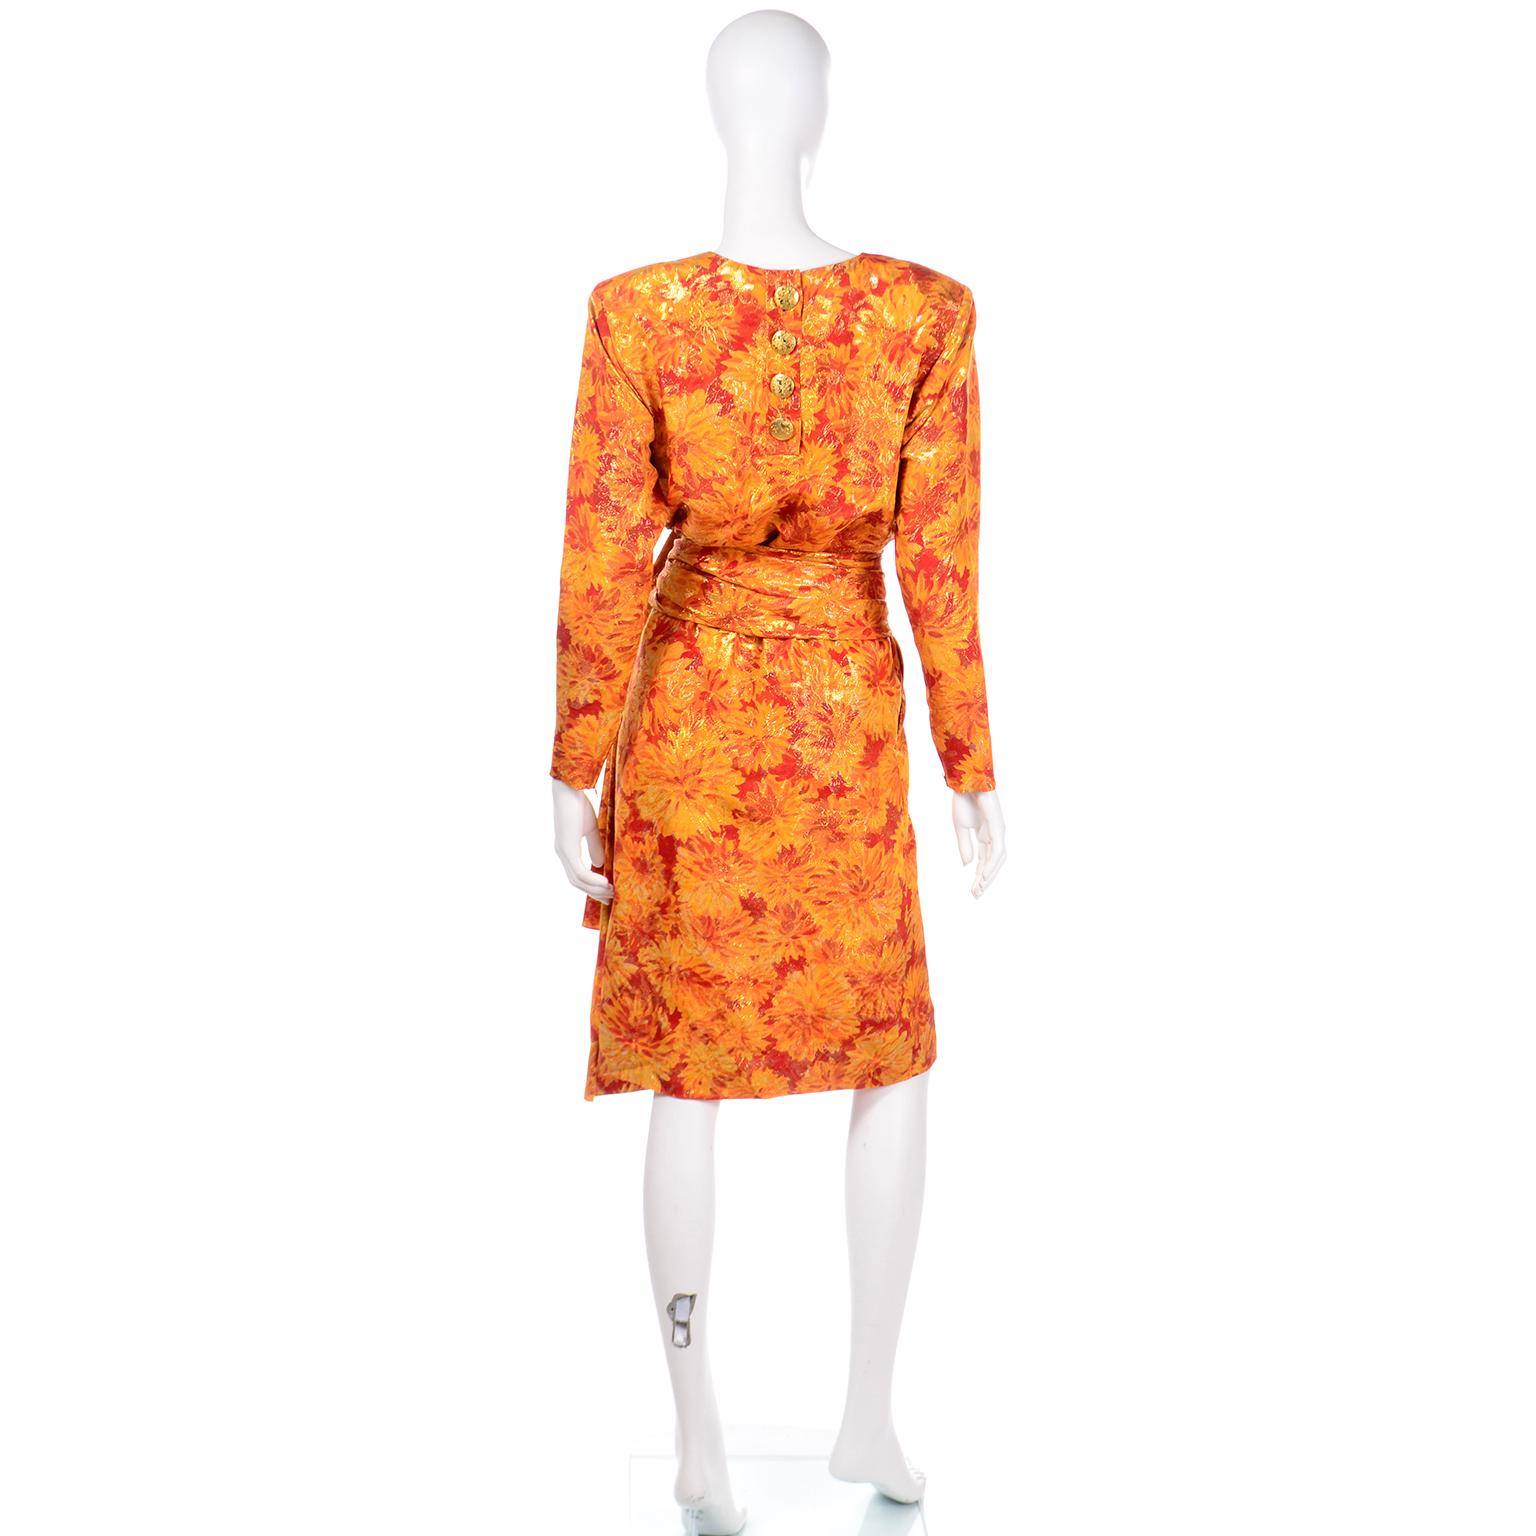 Women's Deadstock YSL 1989 Orange Metallic Documented Yves Saint Laurent Runway Dress For Sale